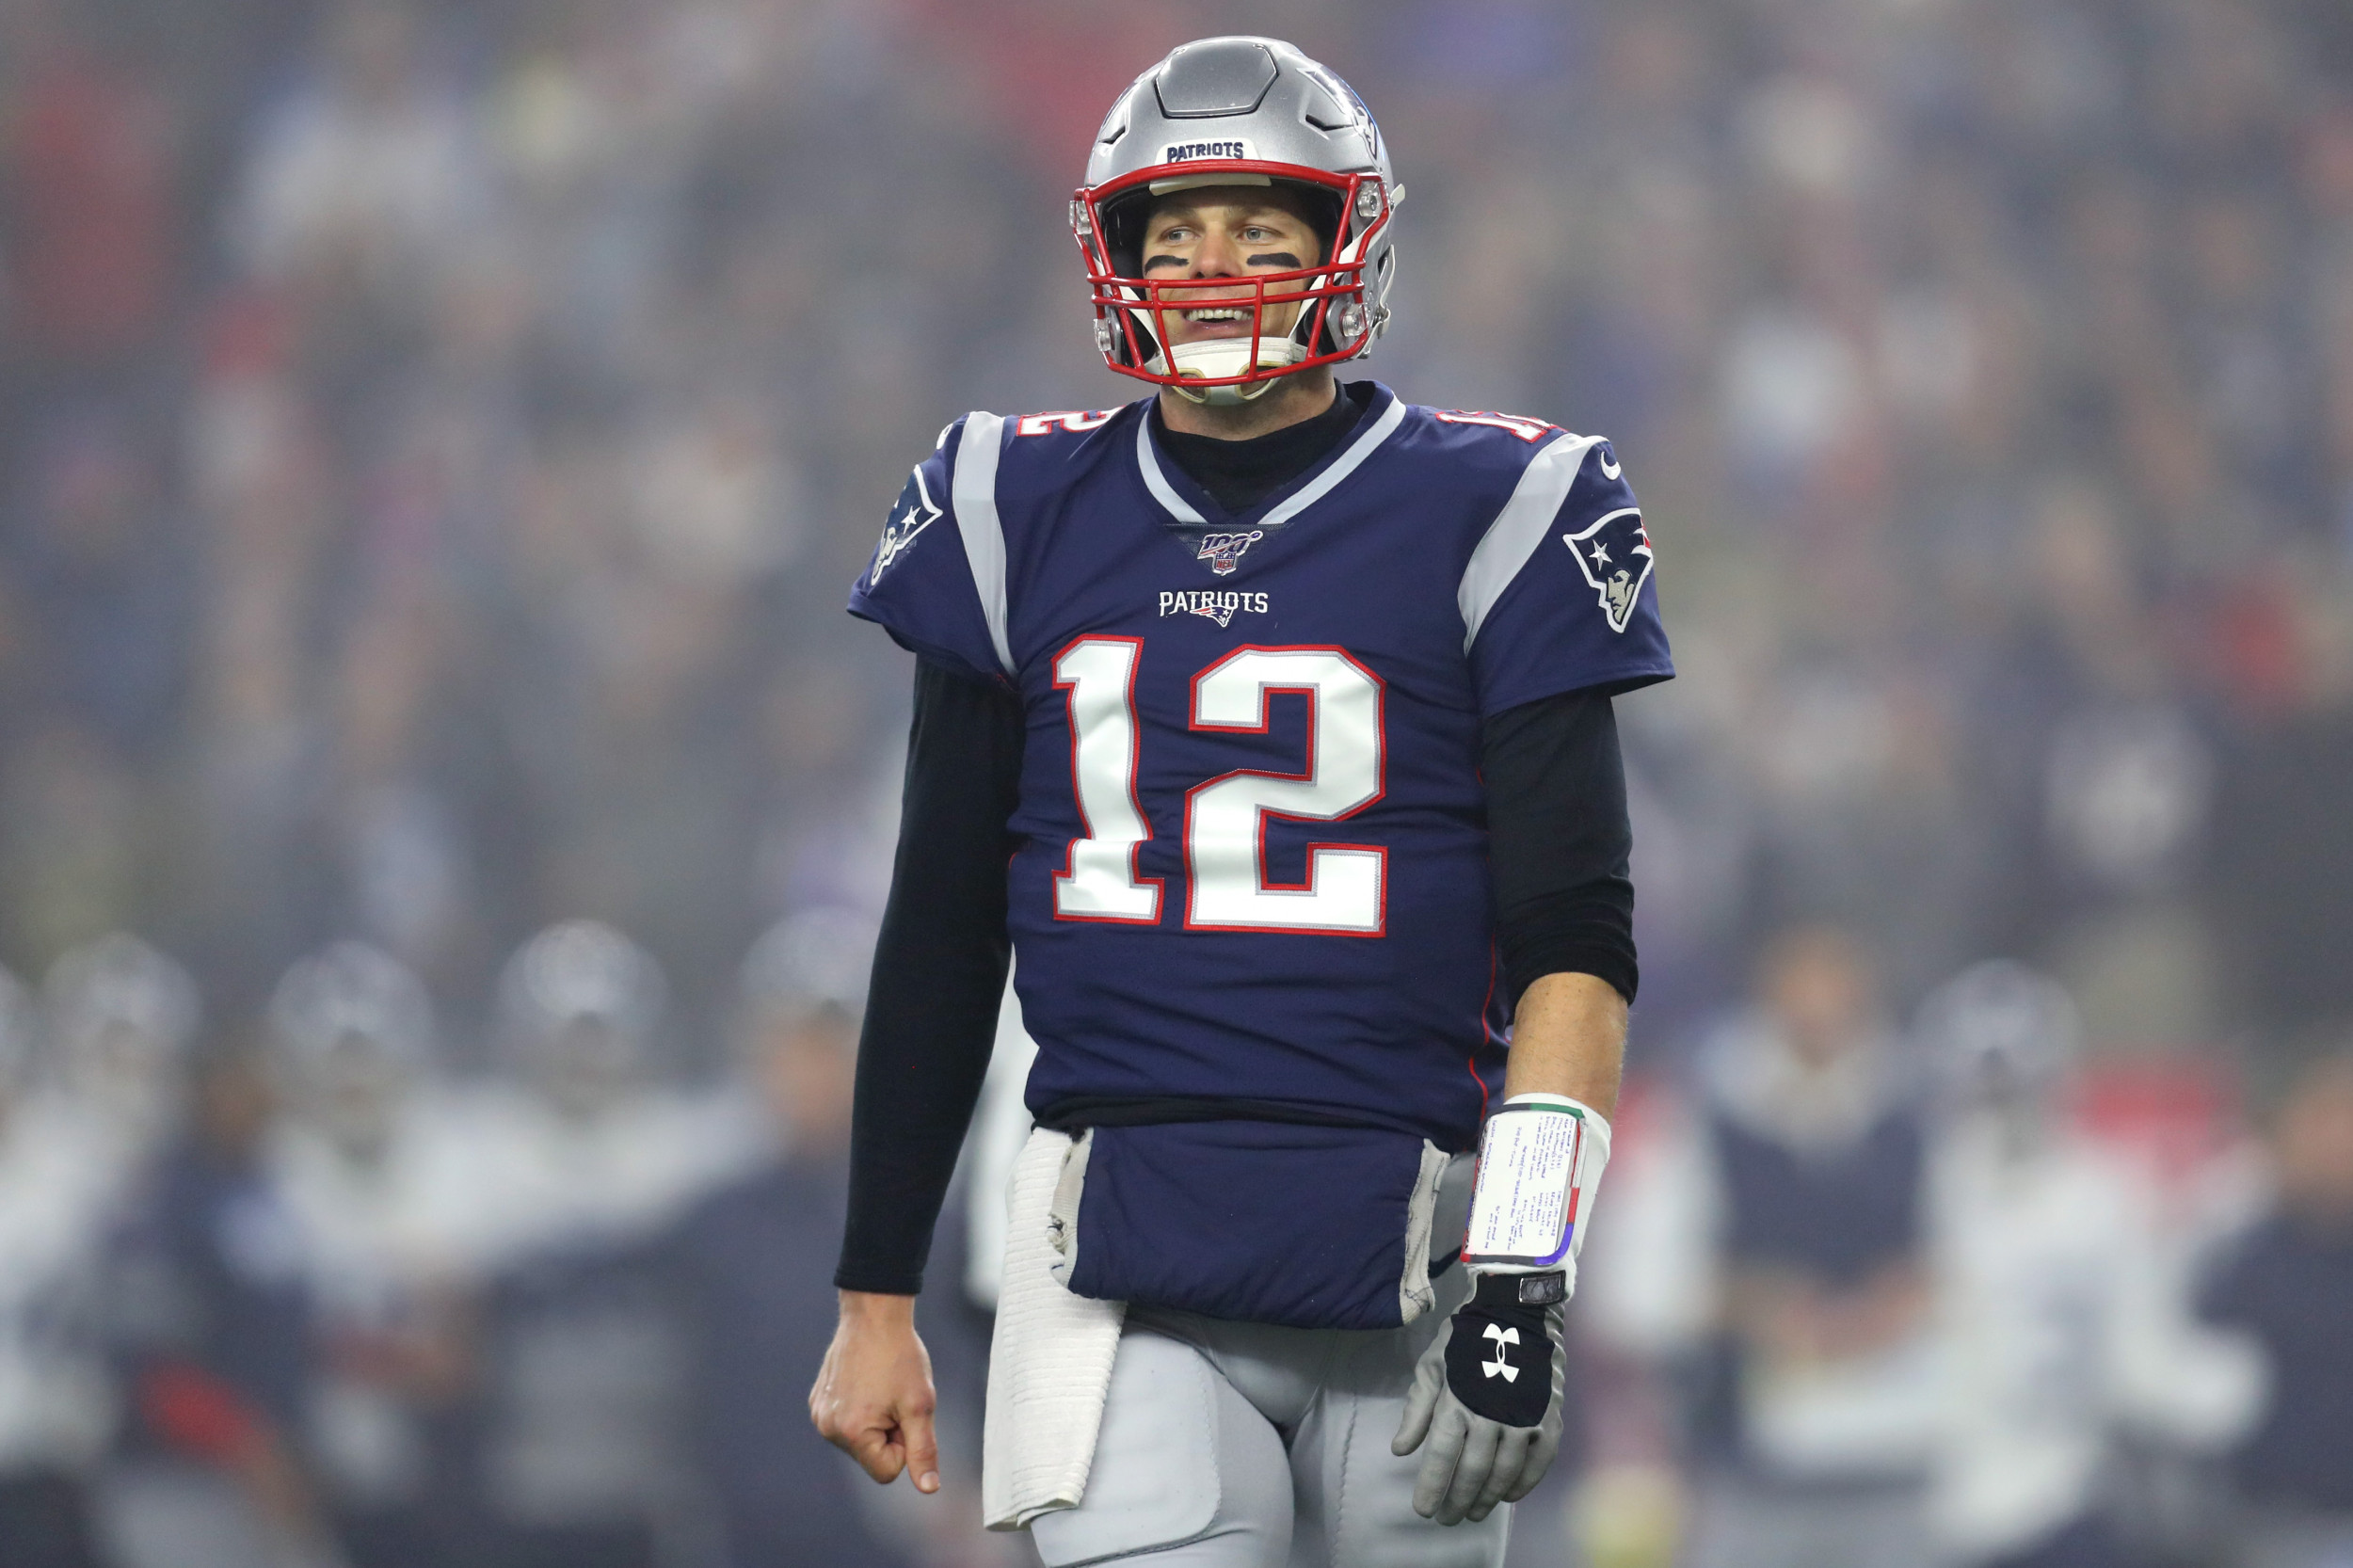 Tom Brady's greatest Super Bowl moments